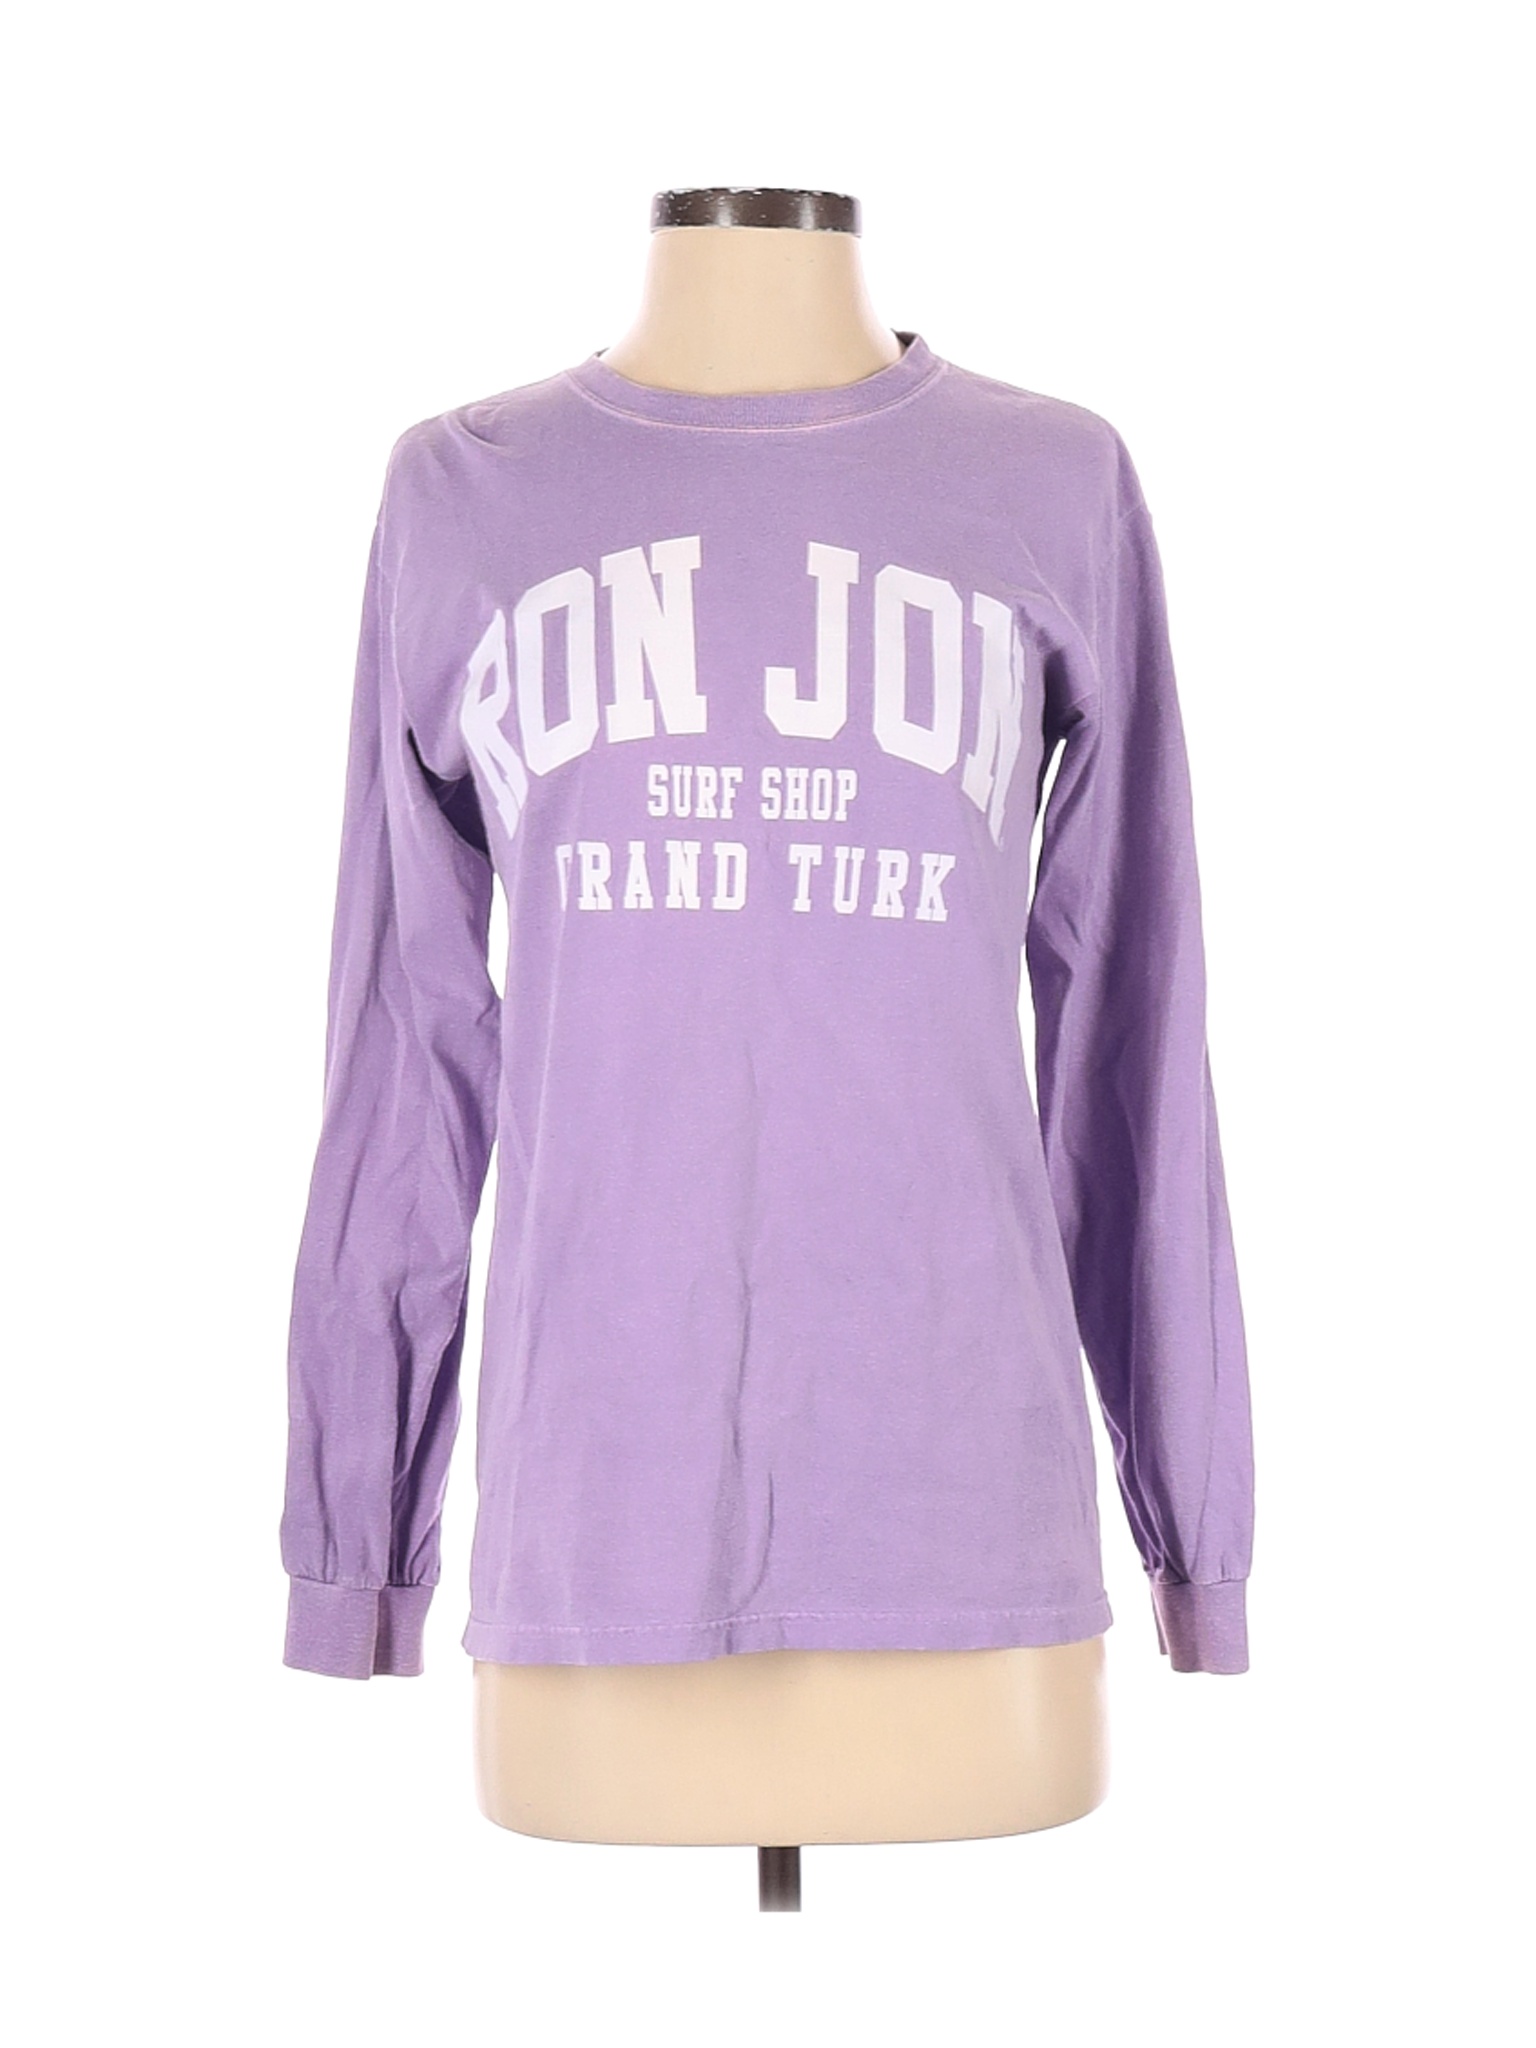 Ron Jon Surf Shop Women Purple Long Sleeve T-Shirt S | eBay